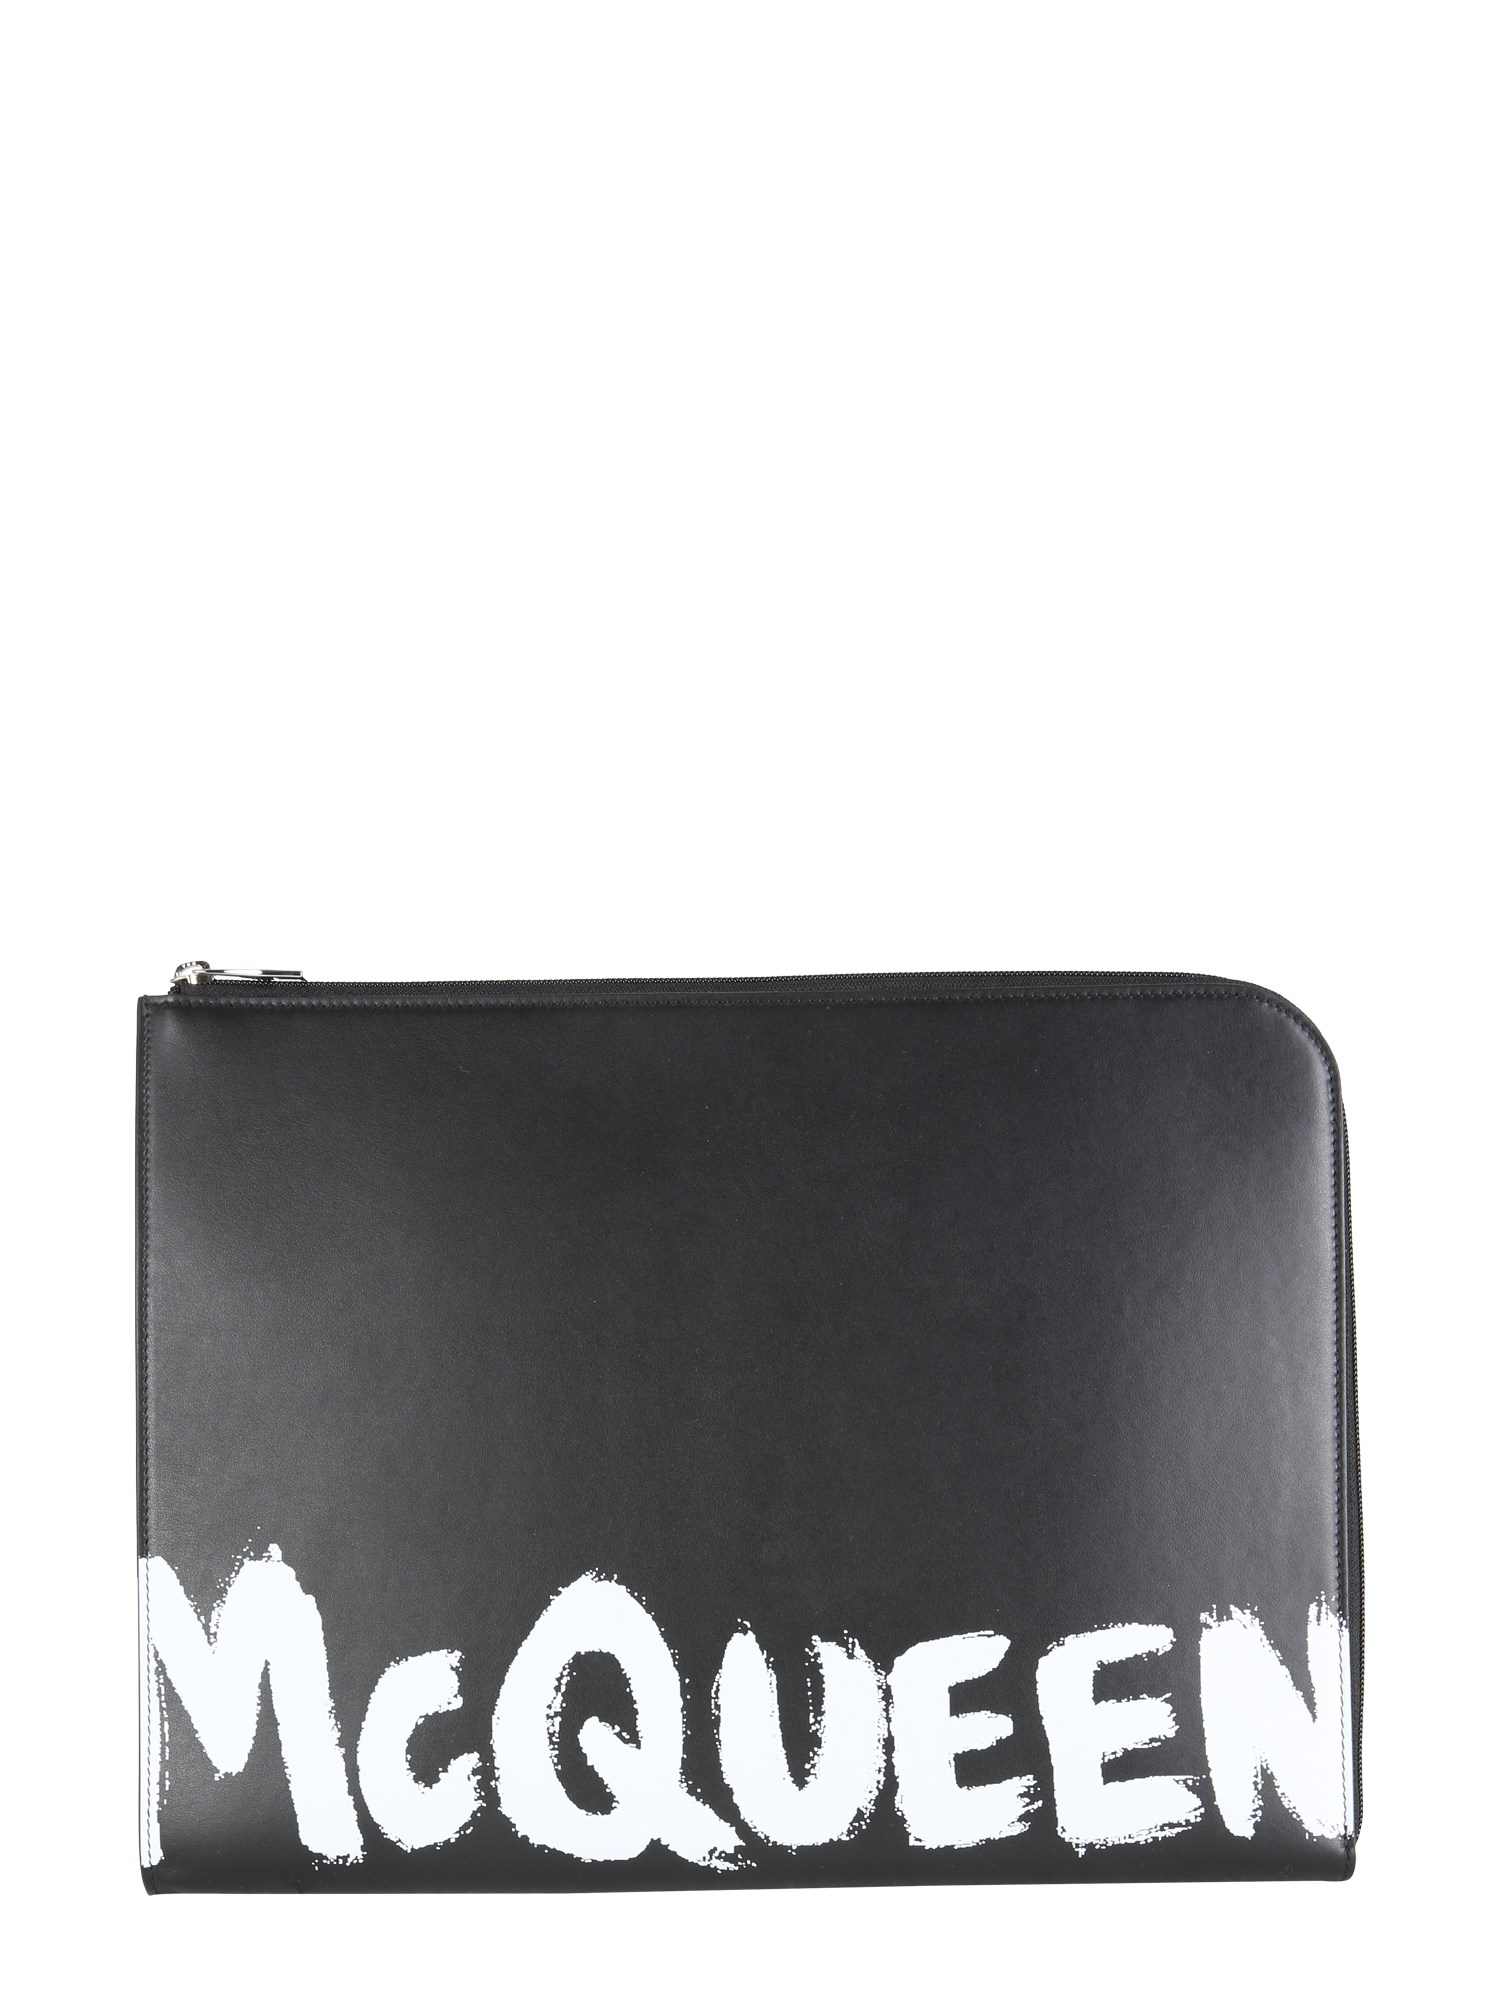 alexander mcqueen pouch with logo